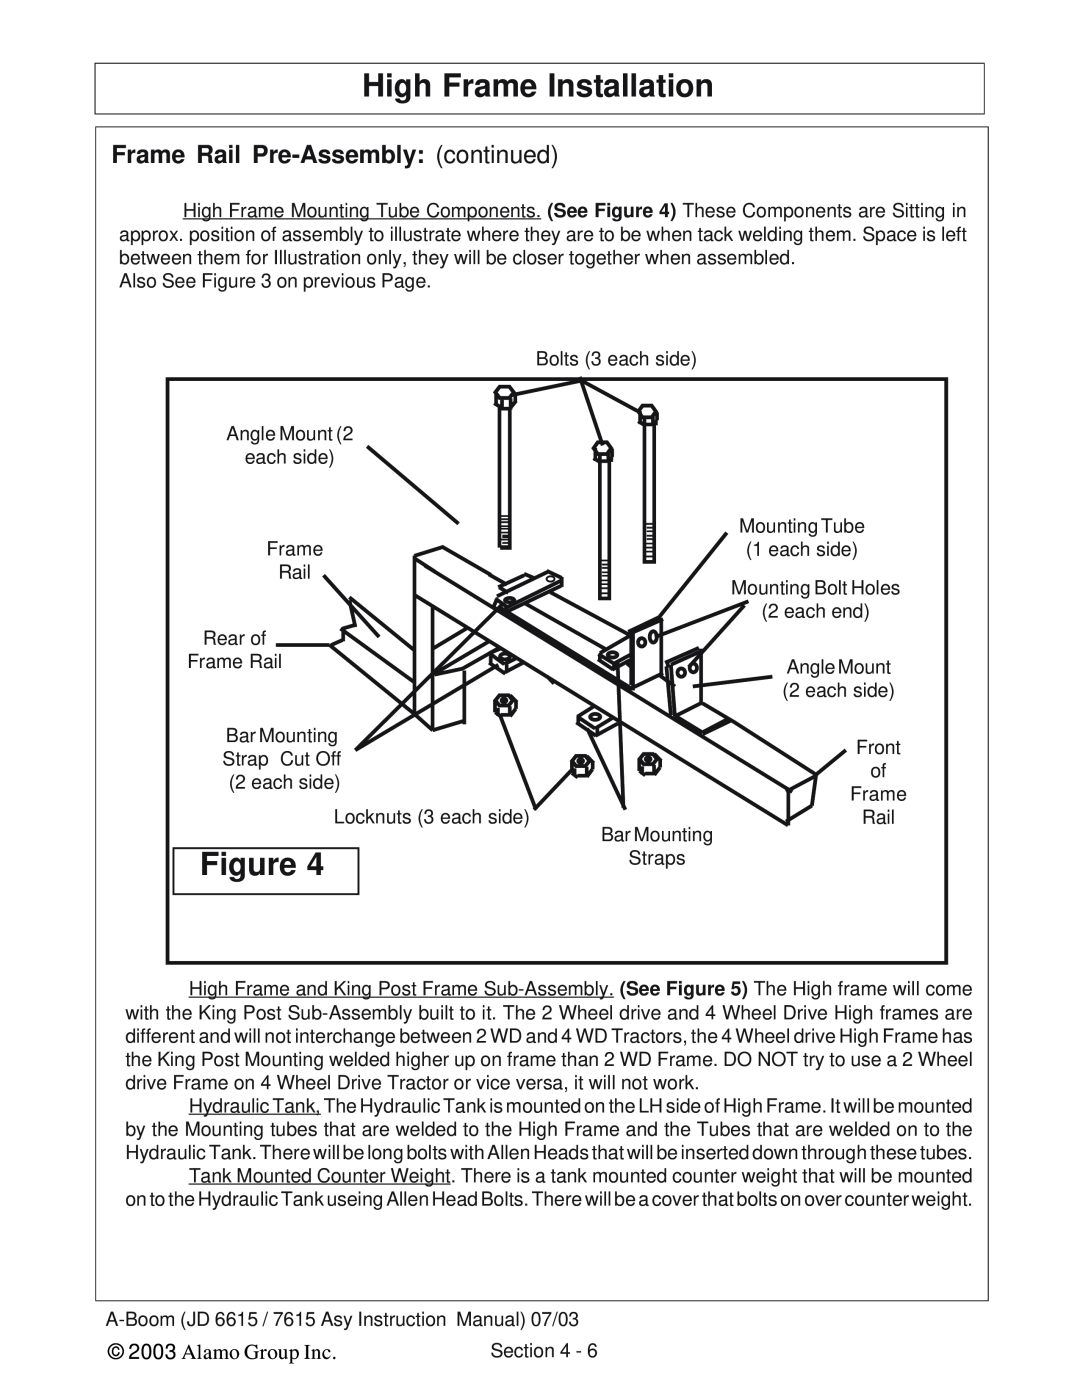 Alamo DSEB-D16/SAS instruction manual High Frame Installation, Frame Rail Pre-Assembly continued, Alamo Group Inc 